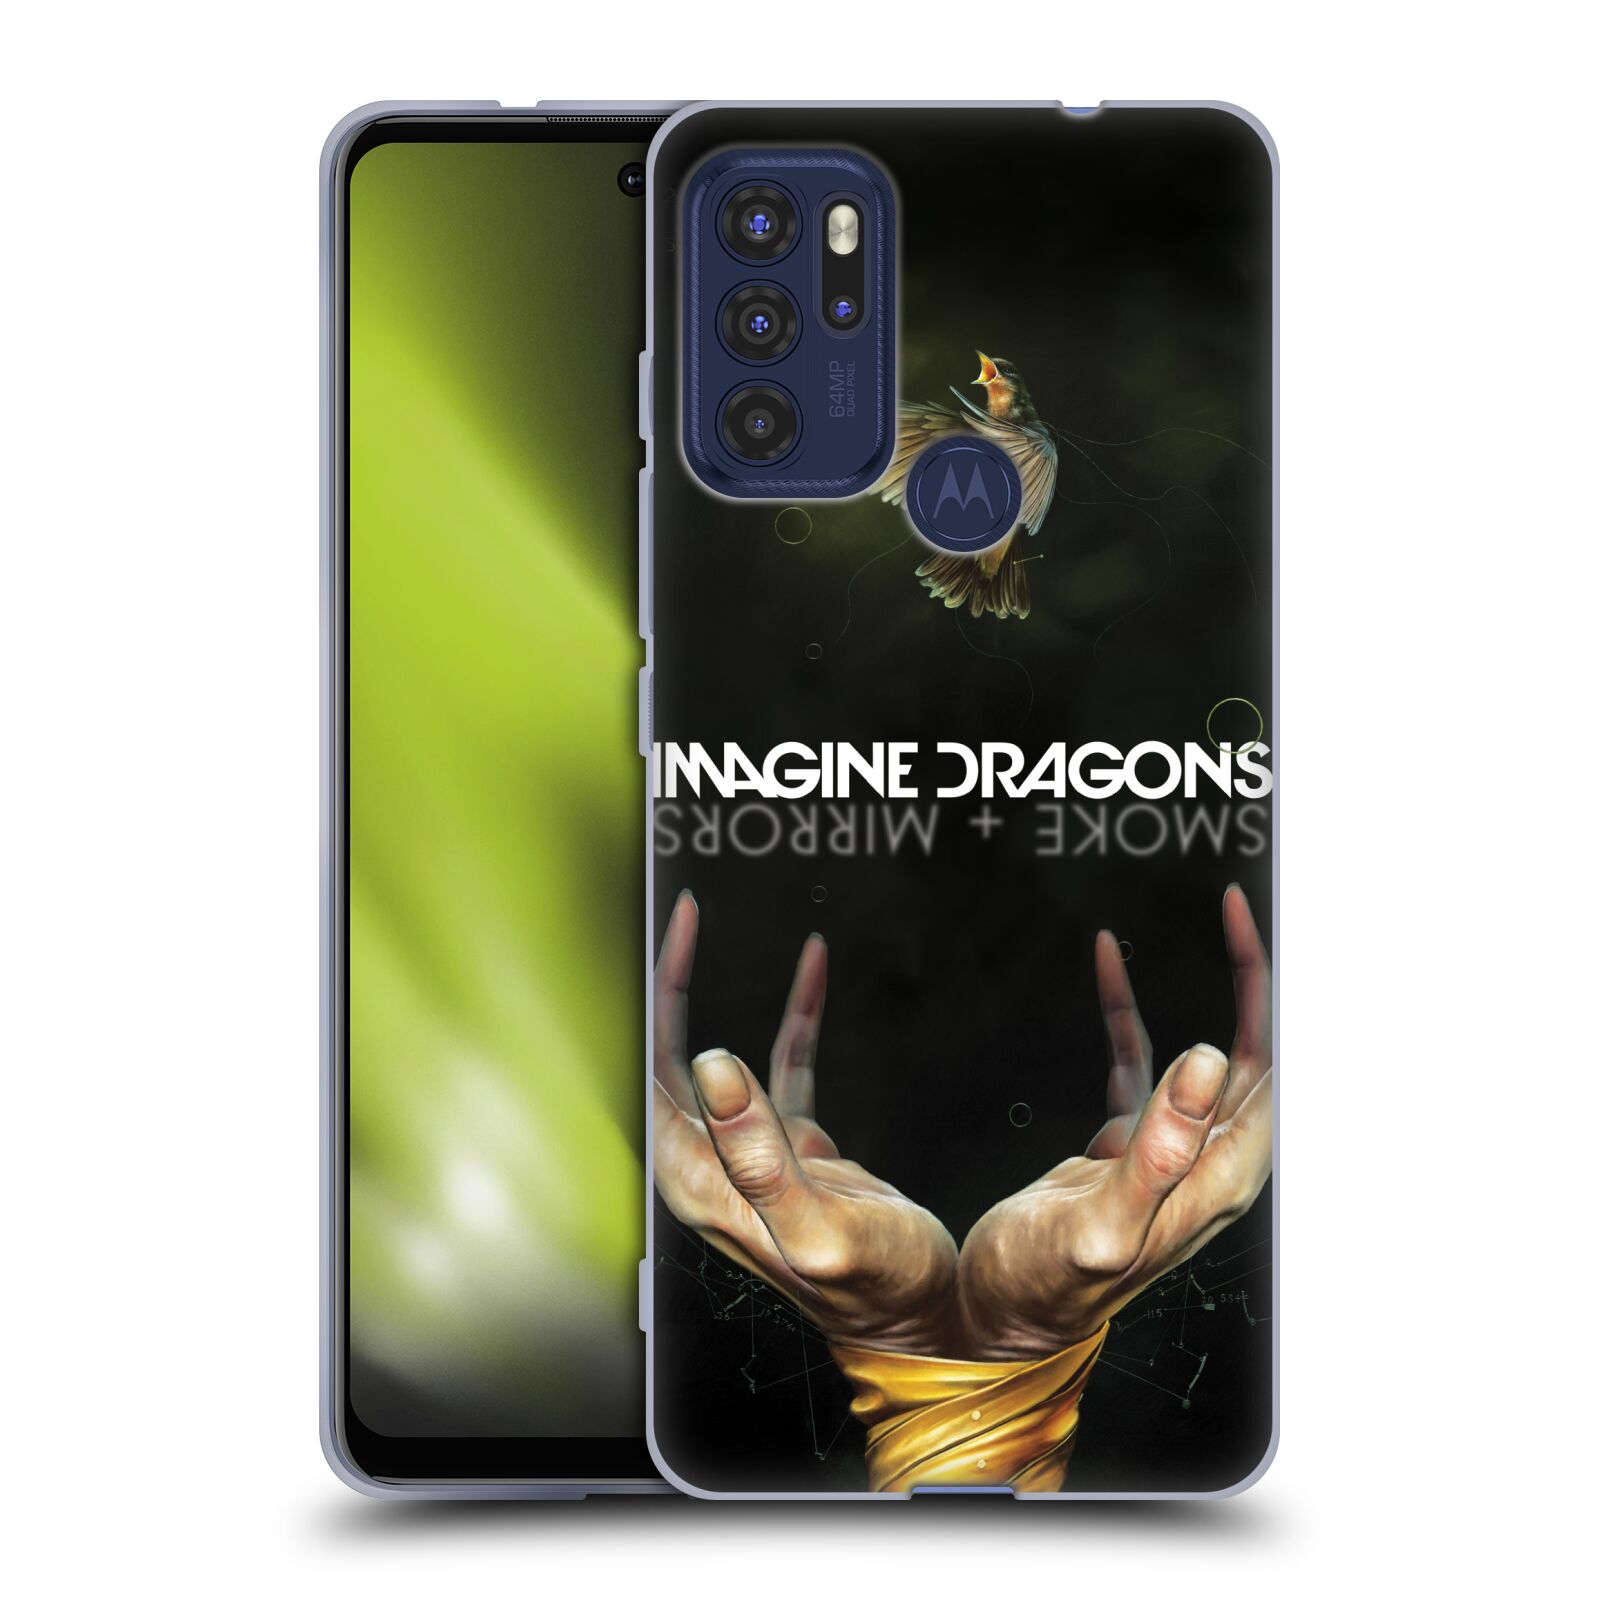 Silikonové pouzdro na mobil Motorola Moto G60s - Imagine Dragons - Smoke And Mirrors